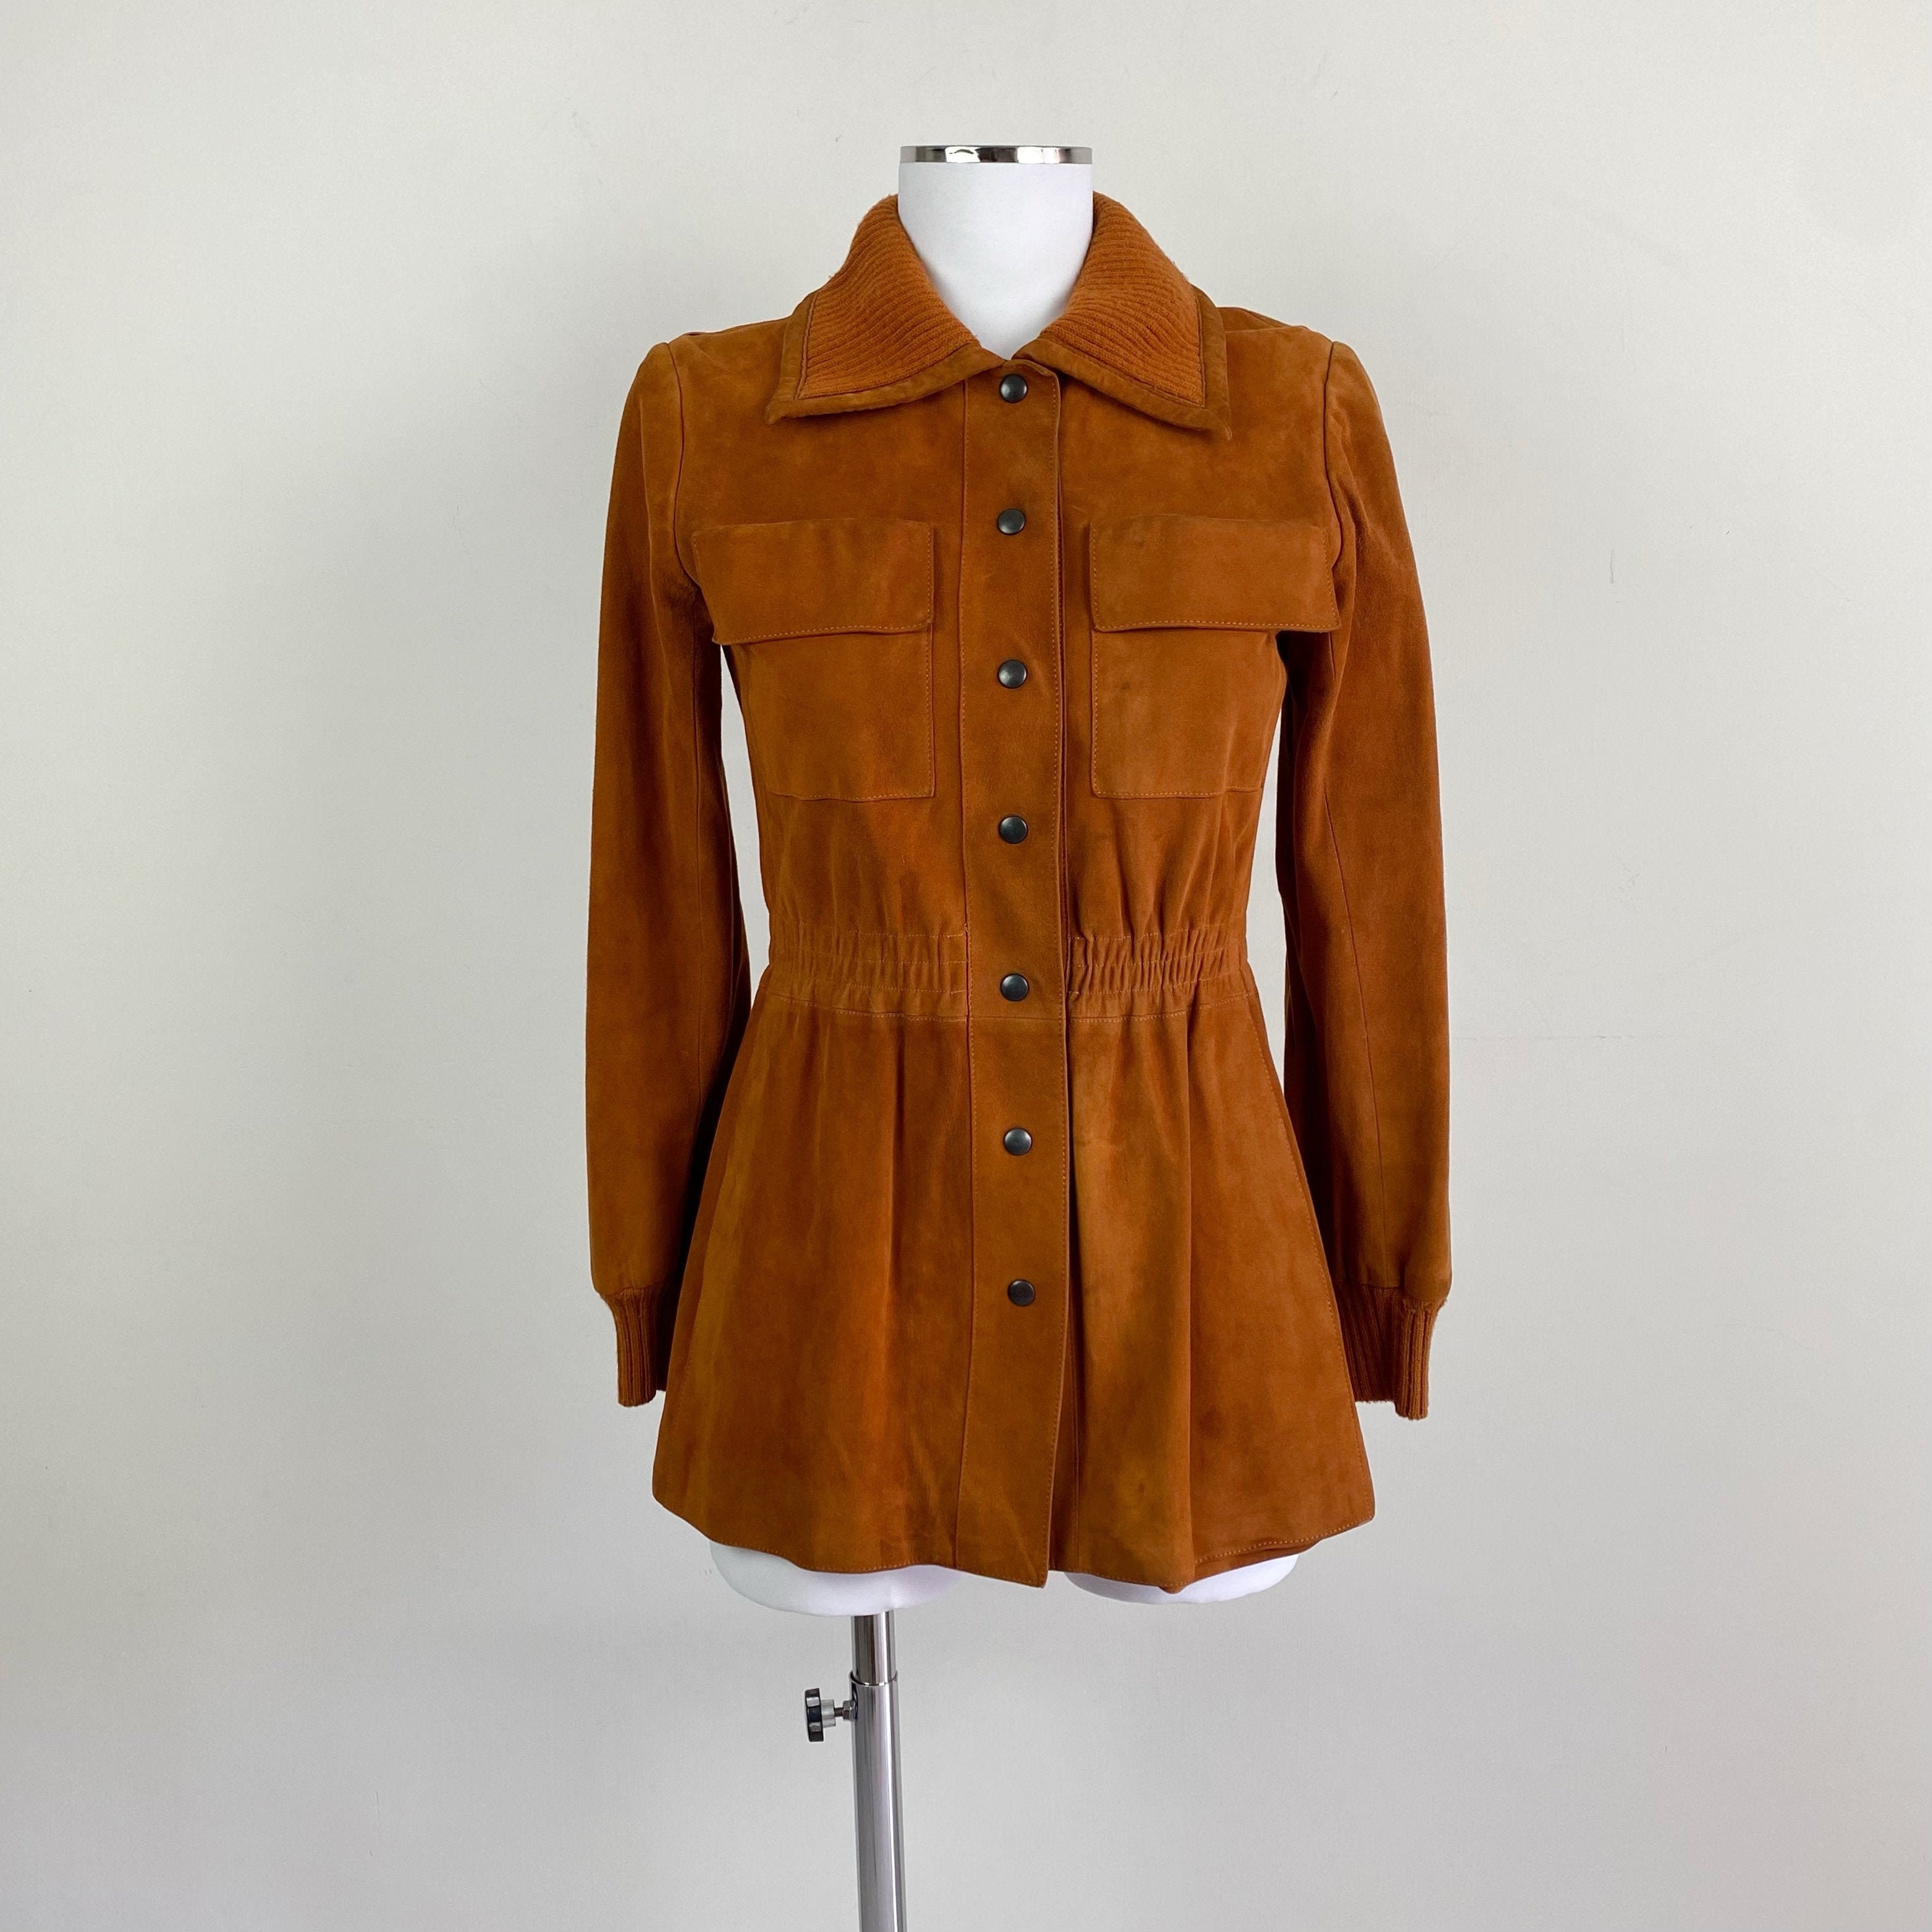 80s 90s vintage EMANUEL UNGARO suede leather jacket | Etsy